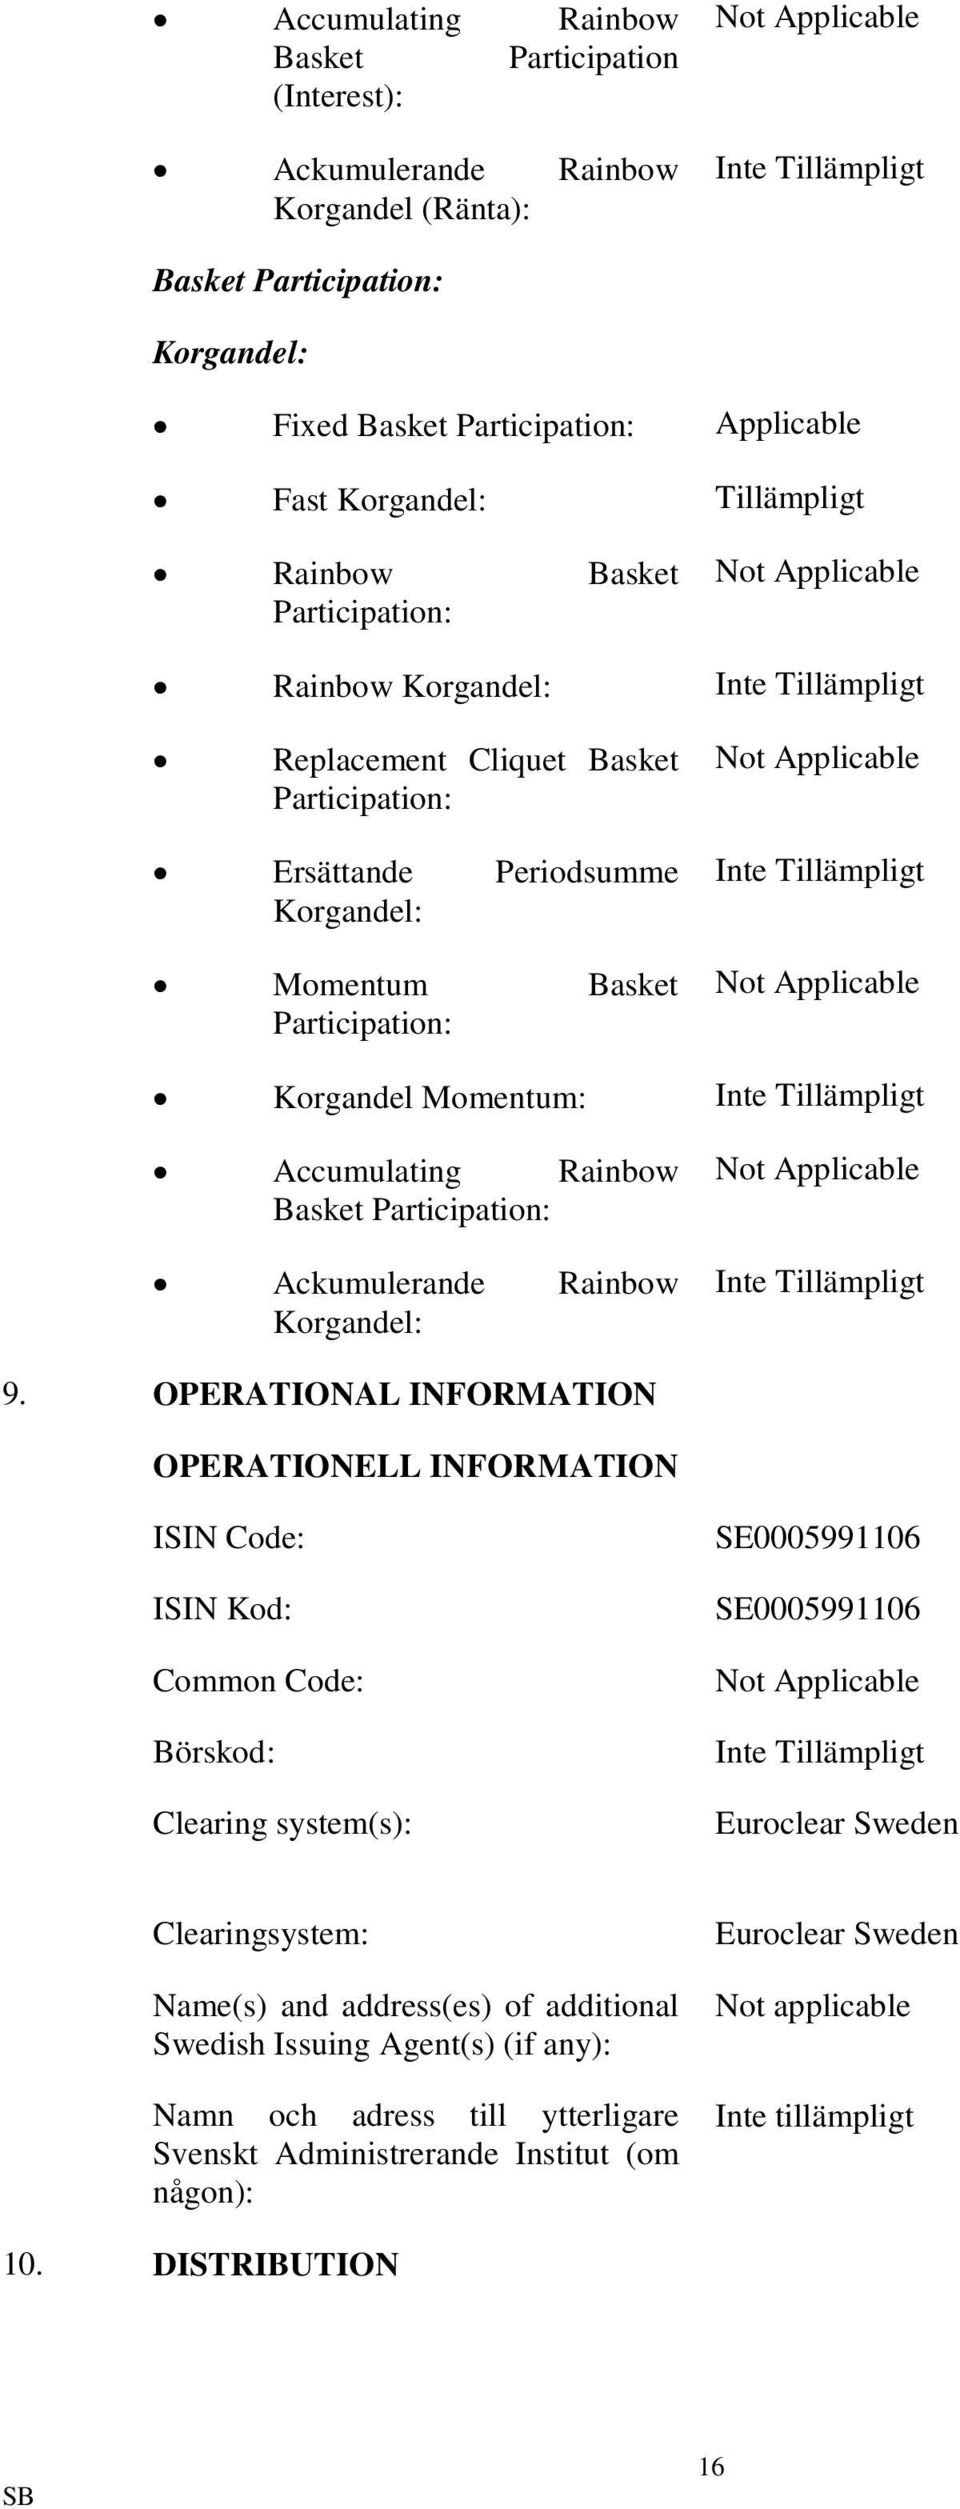 Not Applicable Korgandel Momentum: Accumulating Rainbow Basket Participation: Ackumulerande Rainbow Korgandel: Not Applicable 9.